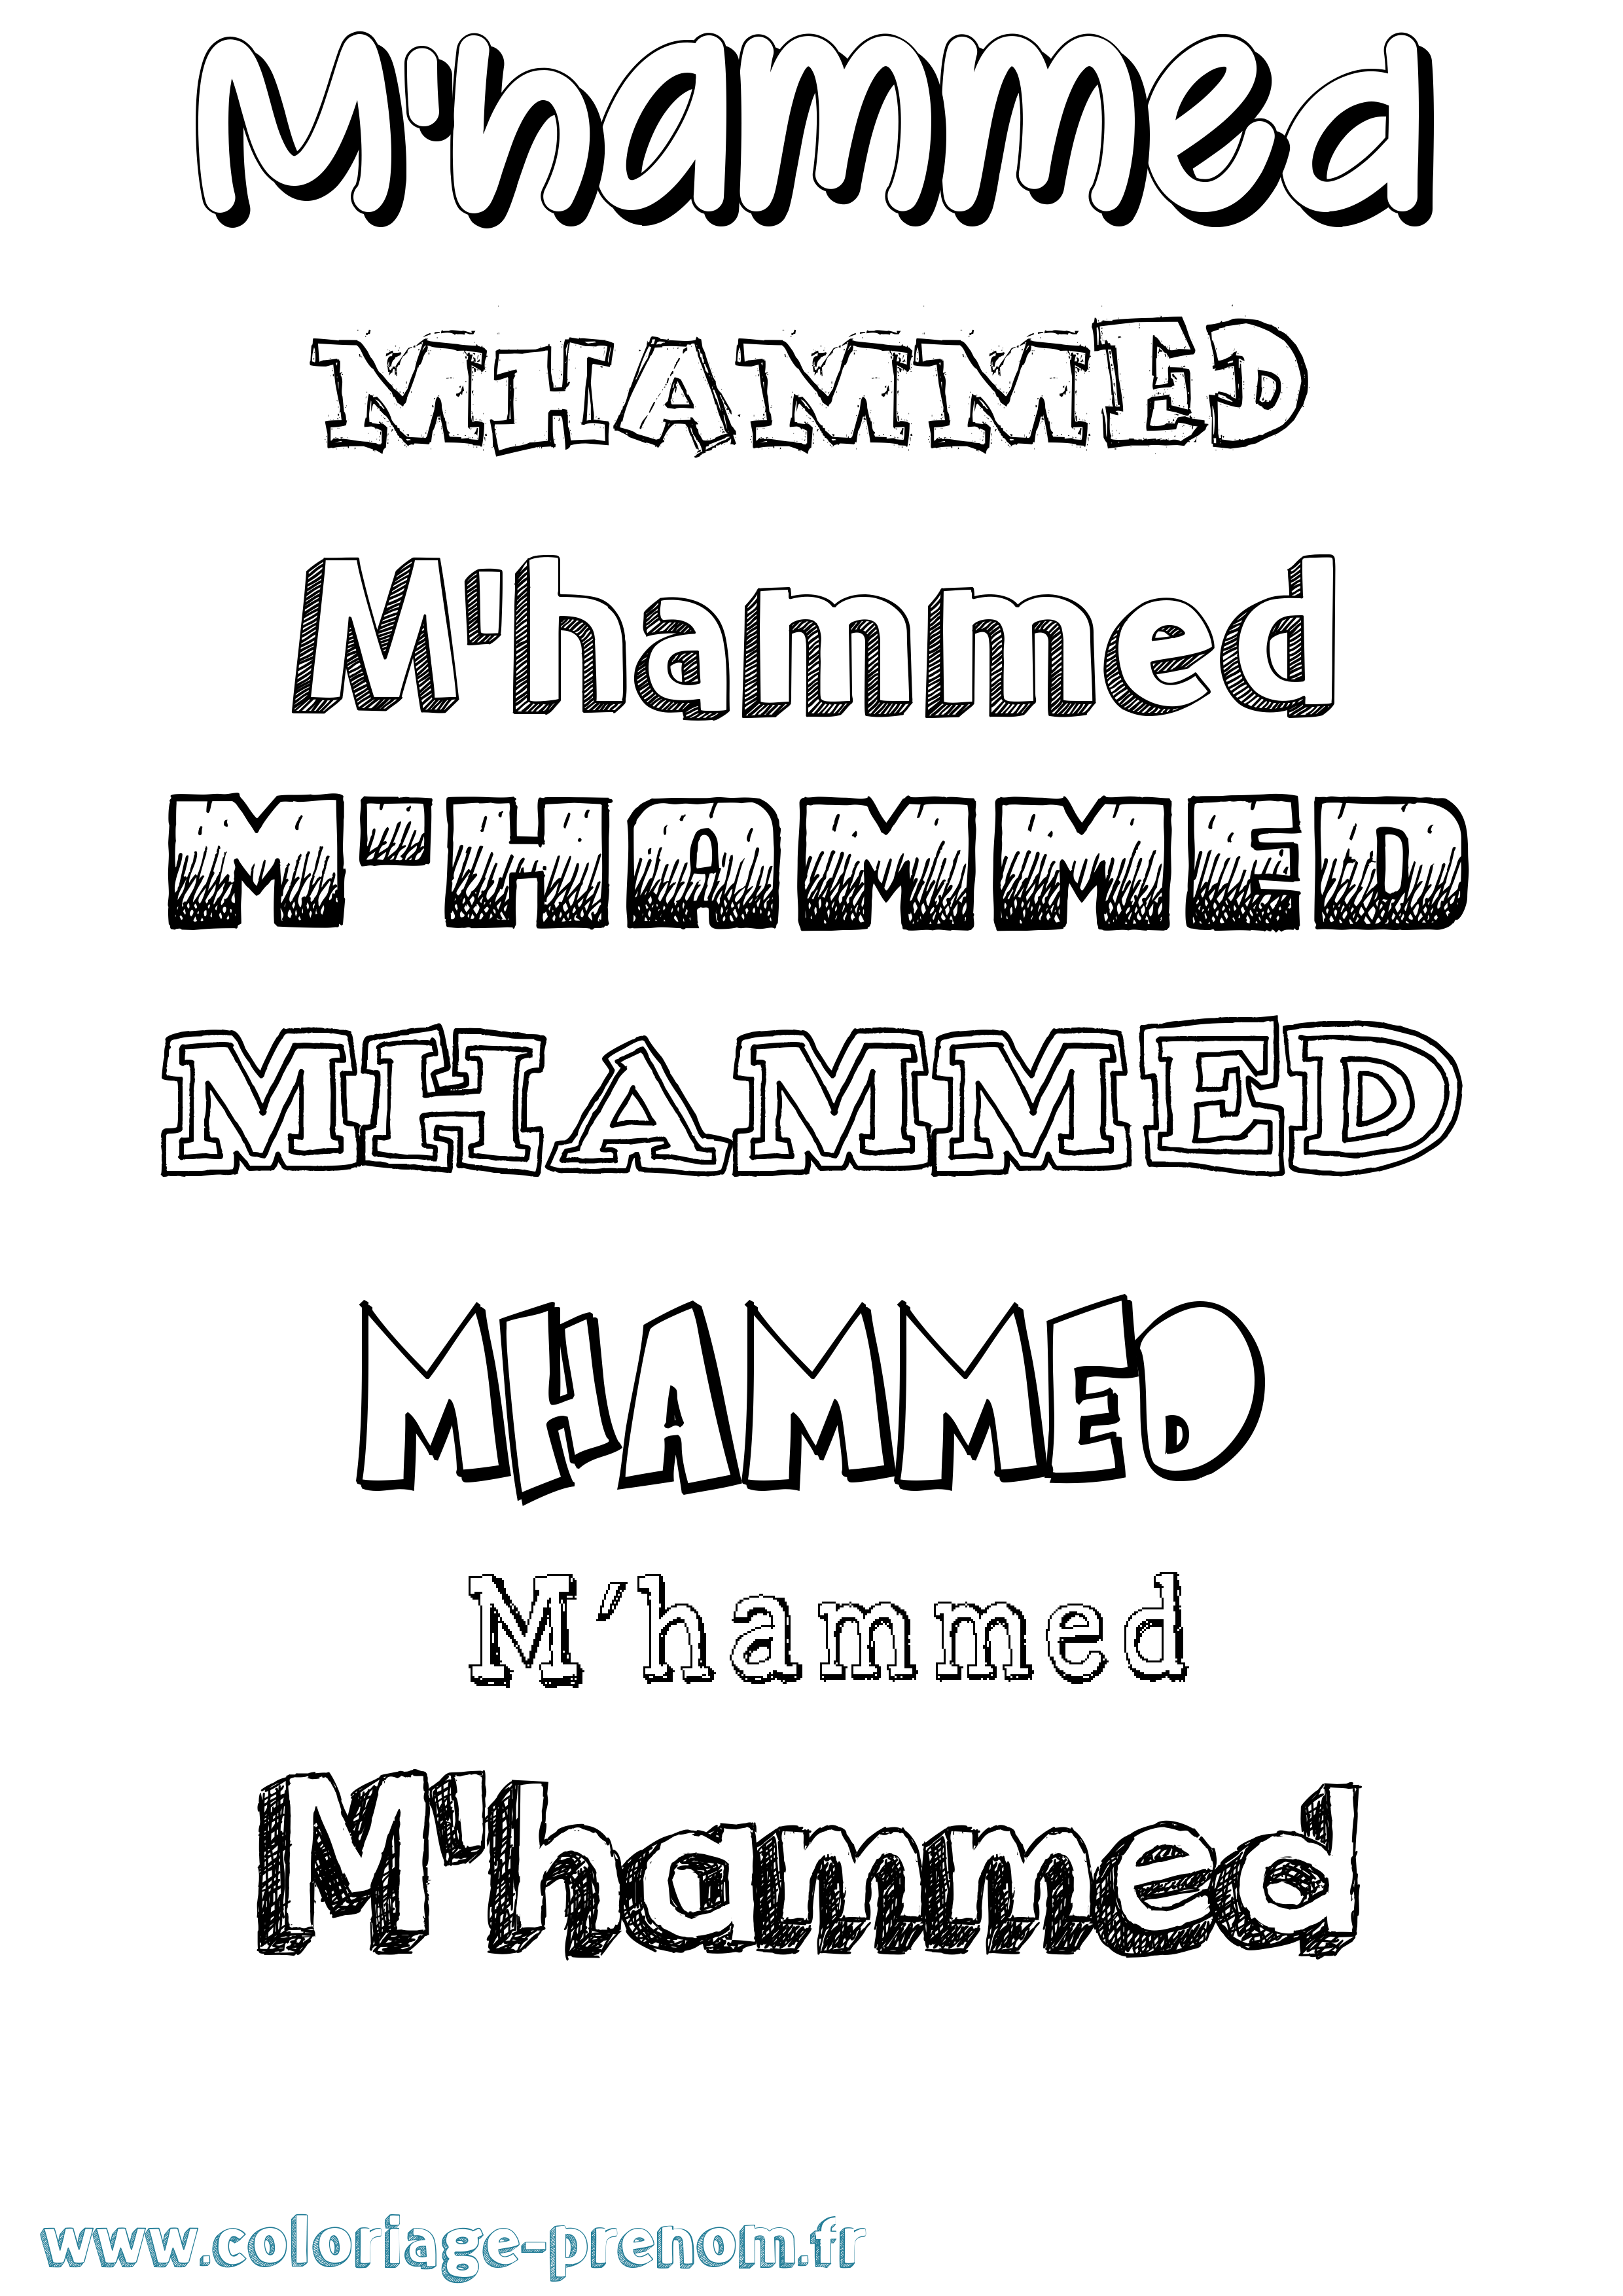 Coloriage prénom M'Hammed Dessiné